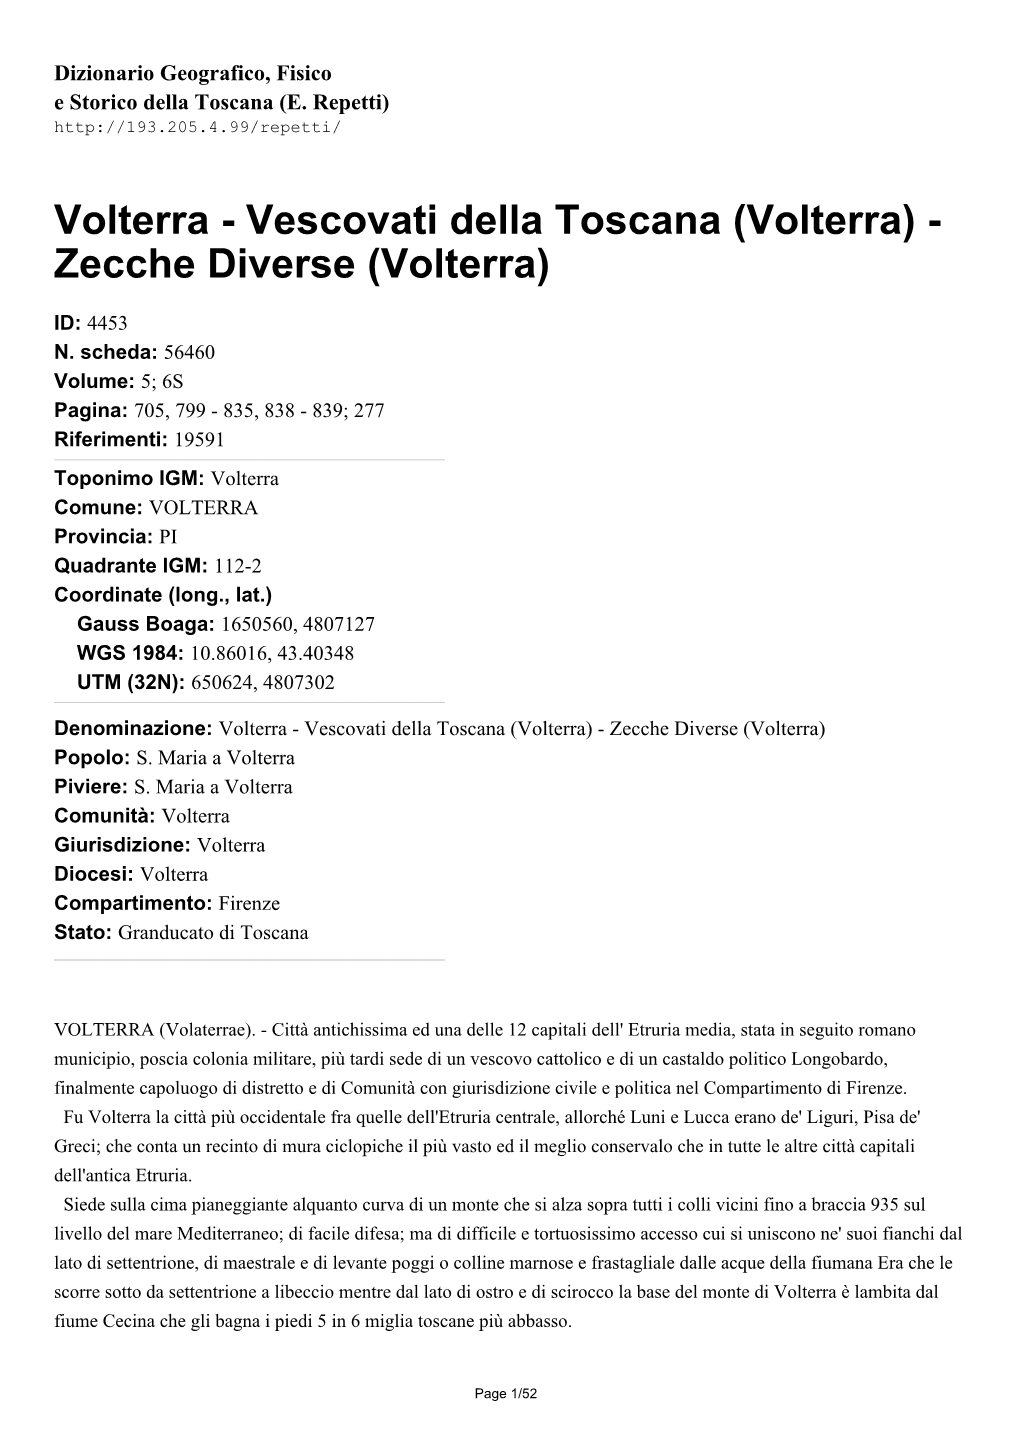 Vescovati Della Toscana (Volterra) - Zecche Diverse (Volterra)